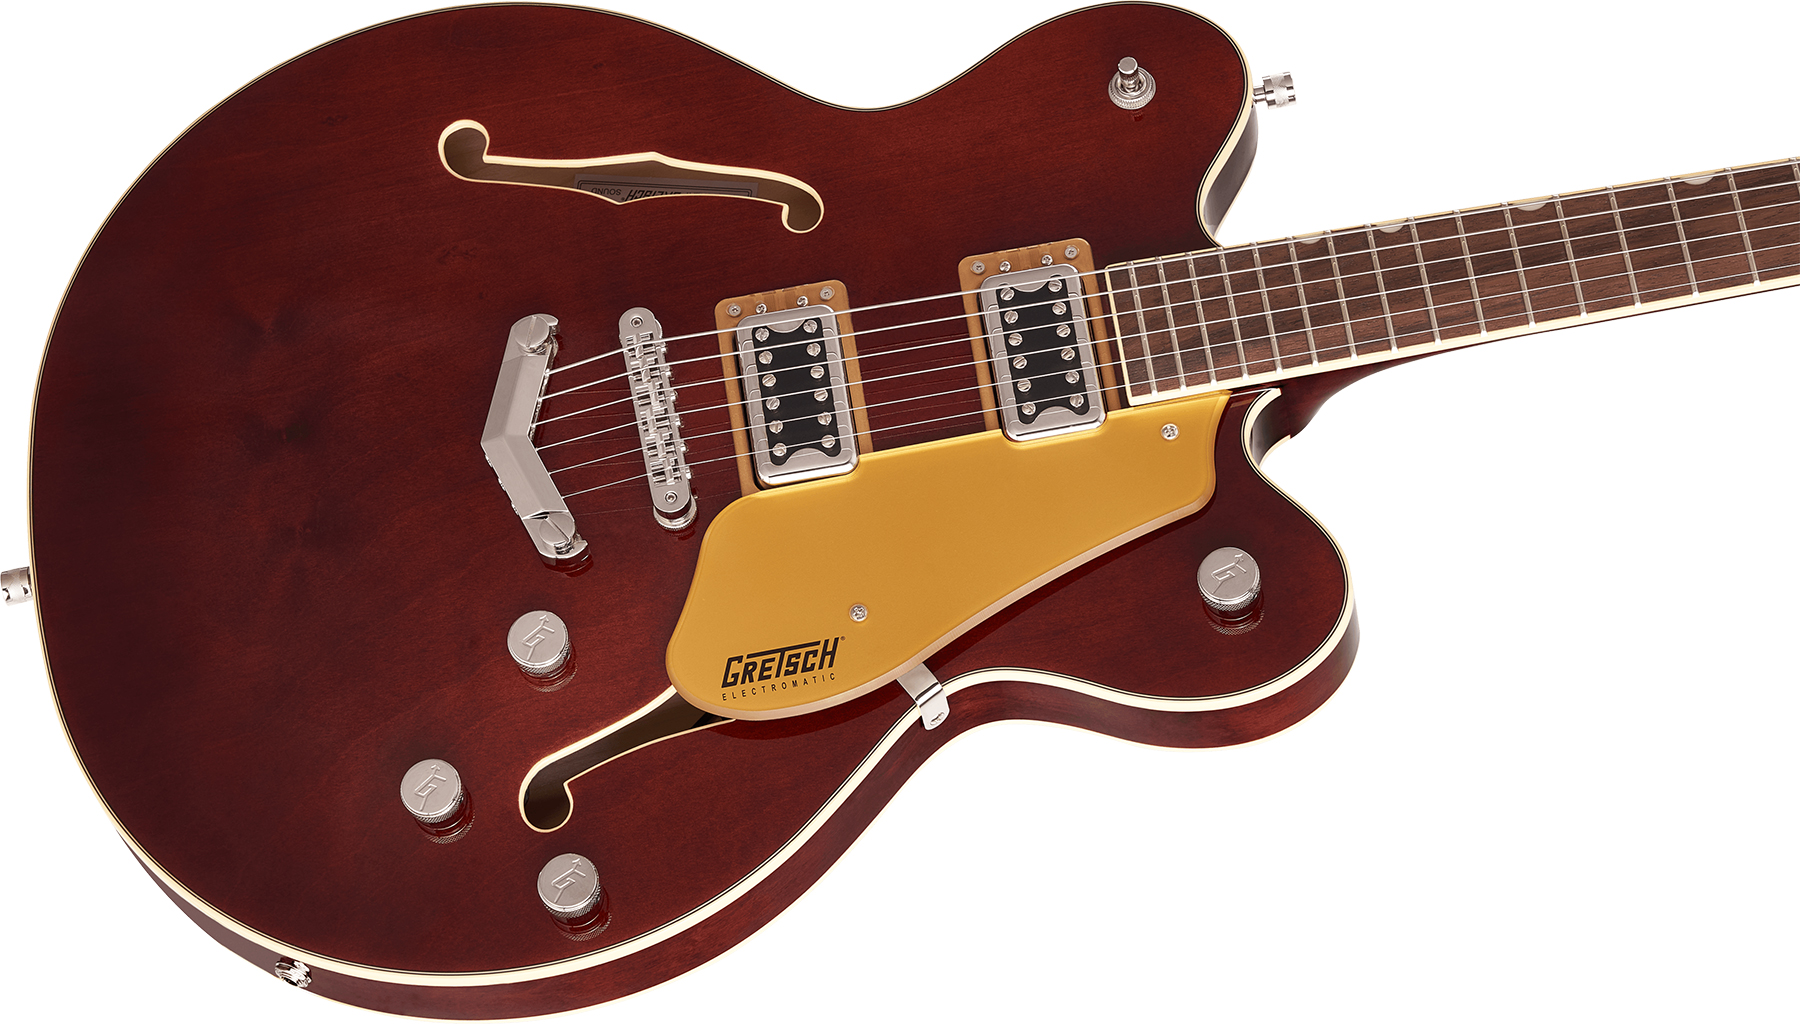 Gretsch G5622 Center Bloc Double Cut V-stoptail Electromatic Hh Ht Lau - Aged Walnut - Semi hollow elektriche gitaar - Variation 2